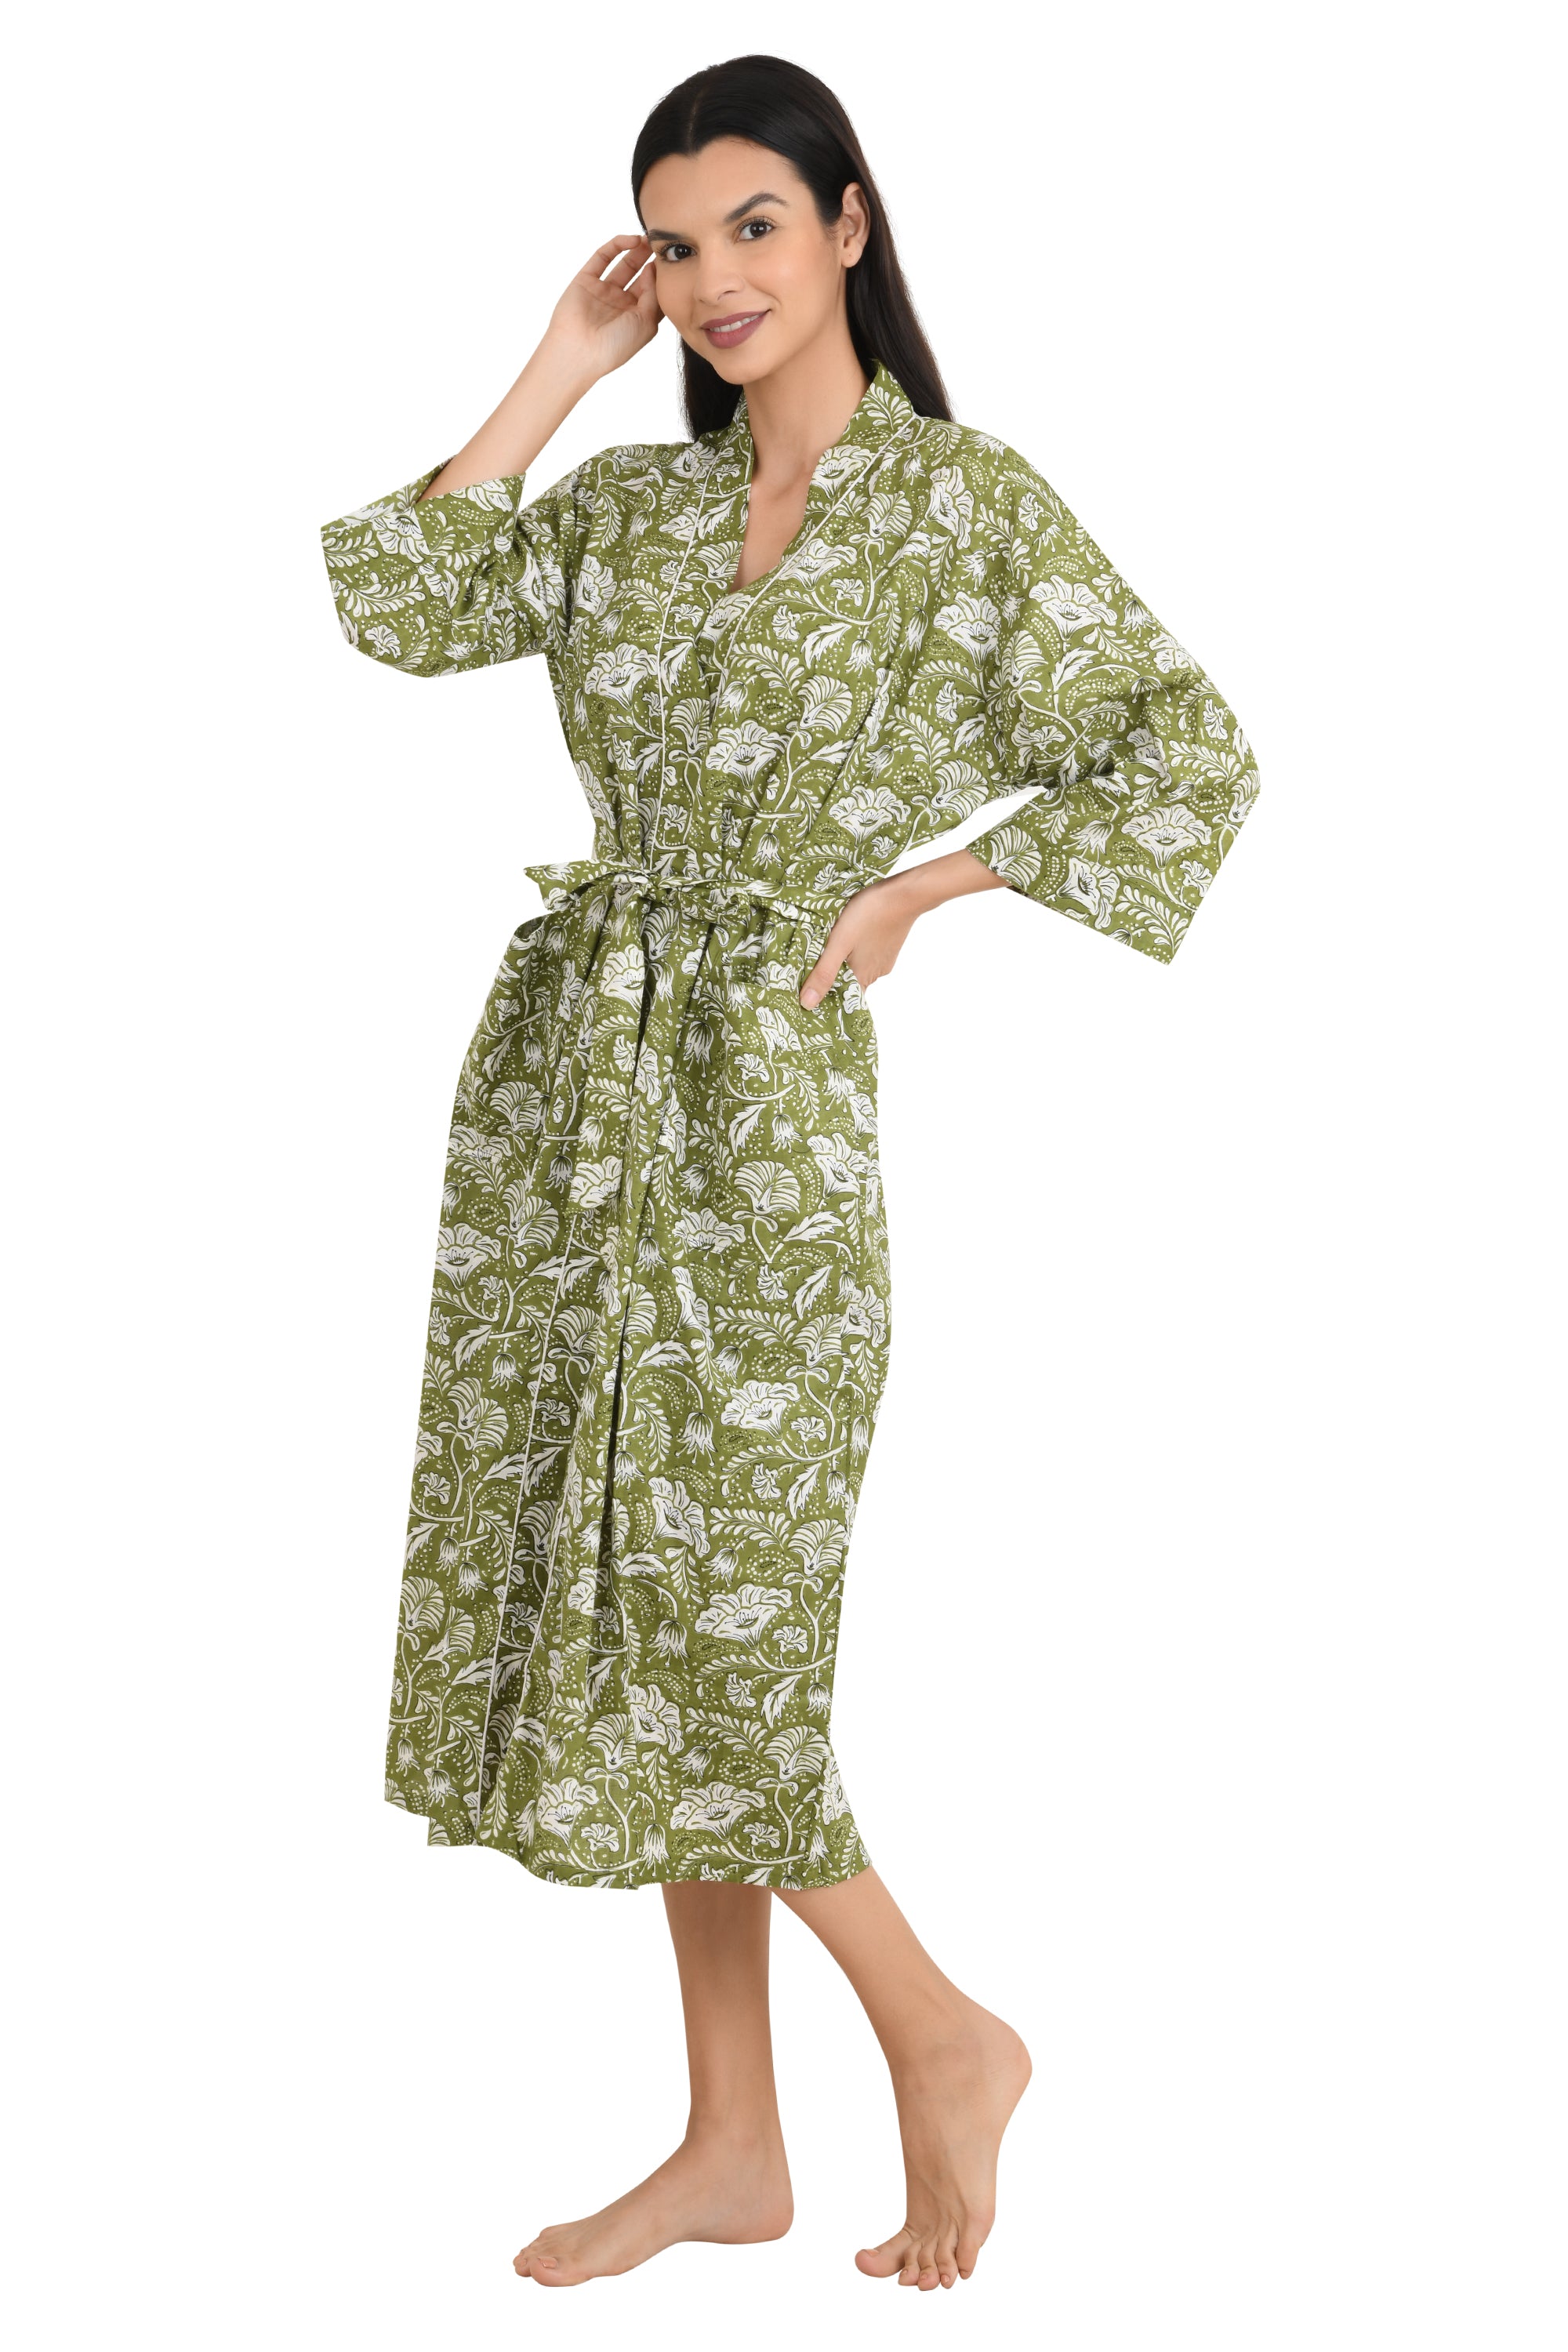 Pure Cotton Kimono Indian Handprinted Boho House Robe Summer Dress | Green White Floral Print | Beach Cover Up Wear | Christmas Present